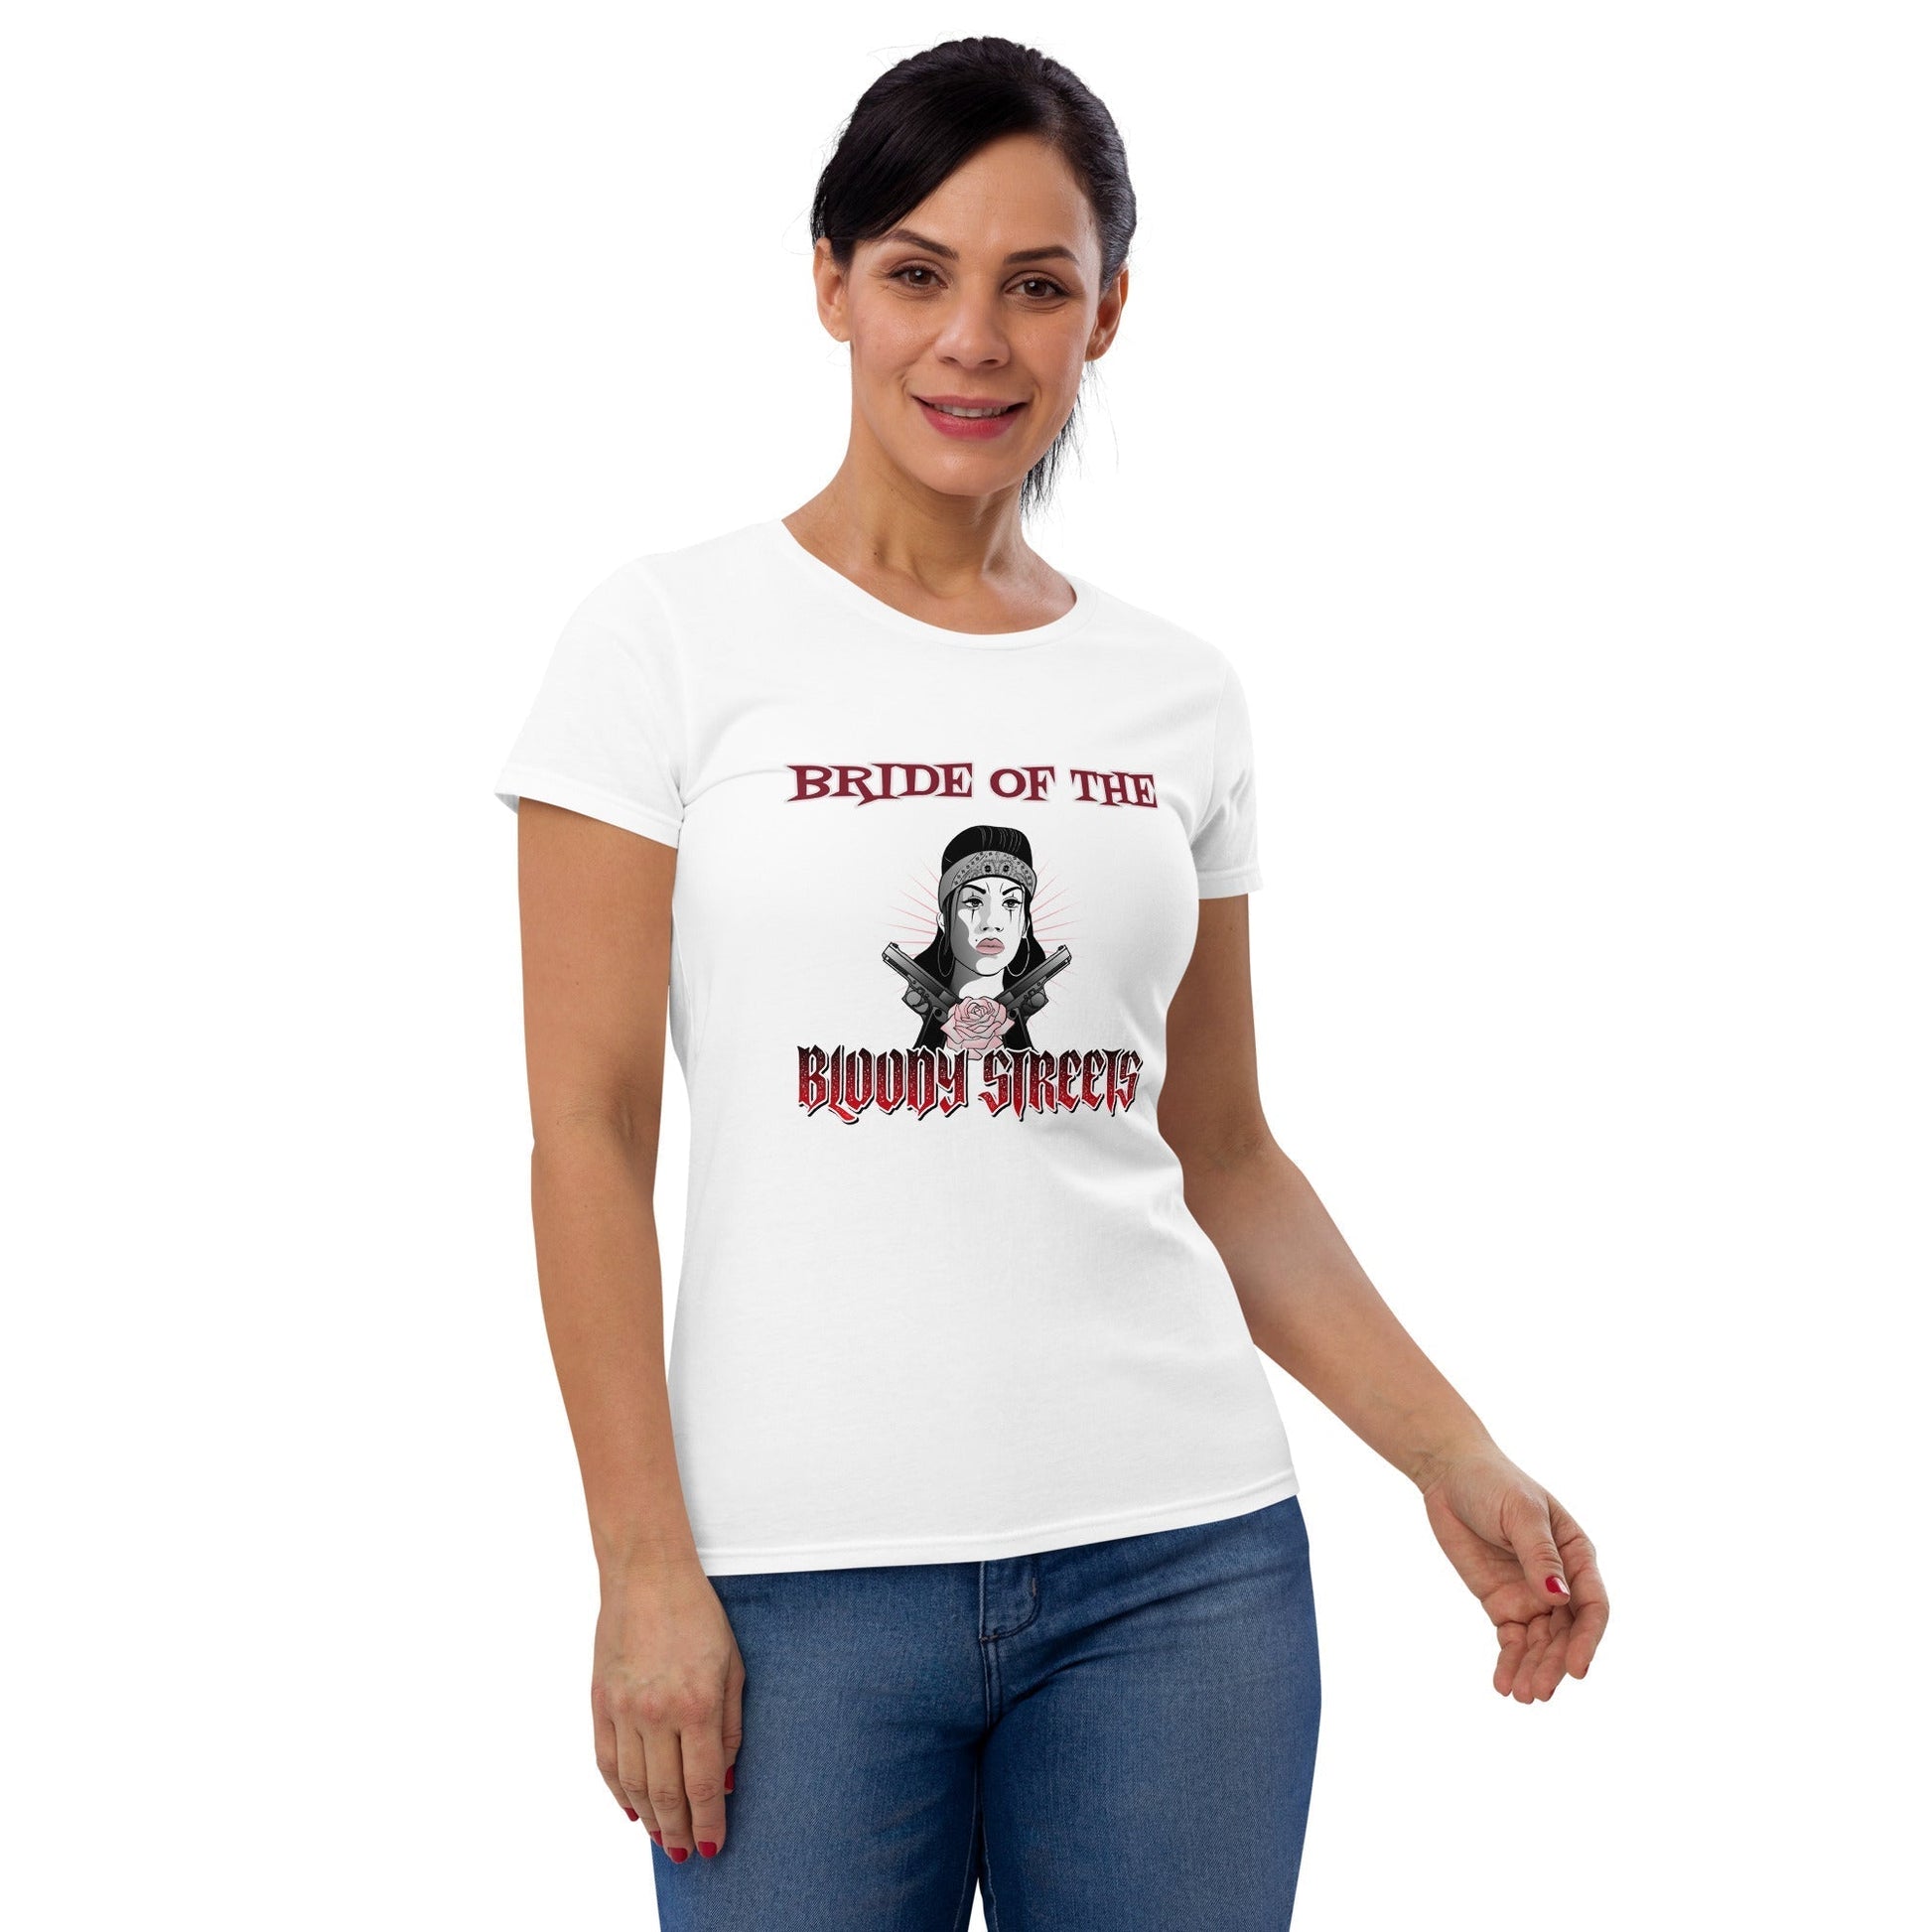 T-Shirt Damen "Bride of the Bloody Streets" - BLOODY-STREETS.DE Streetwear Herren und Damen Hoodies, T-Shirts, Pullis